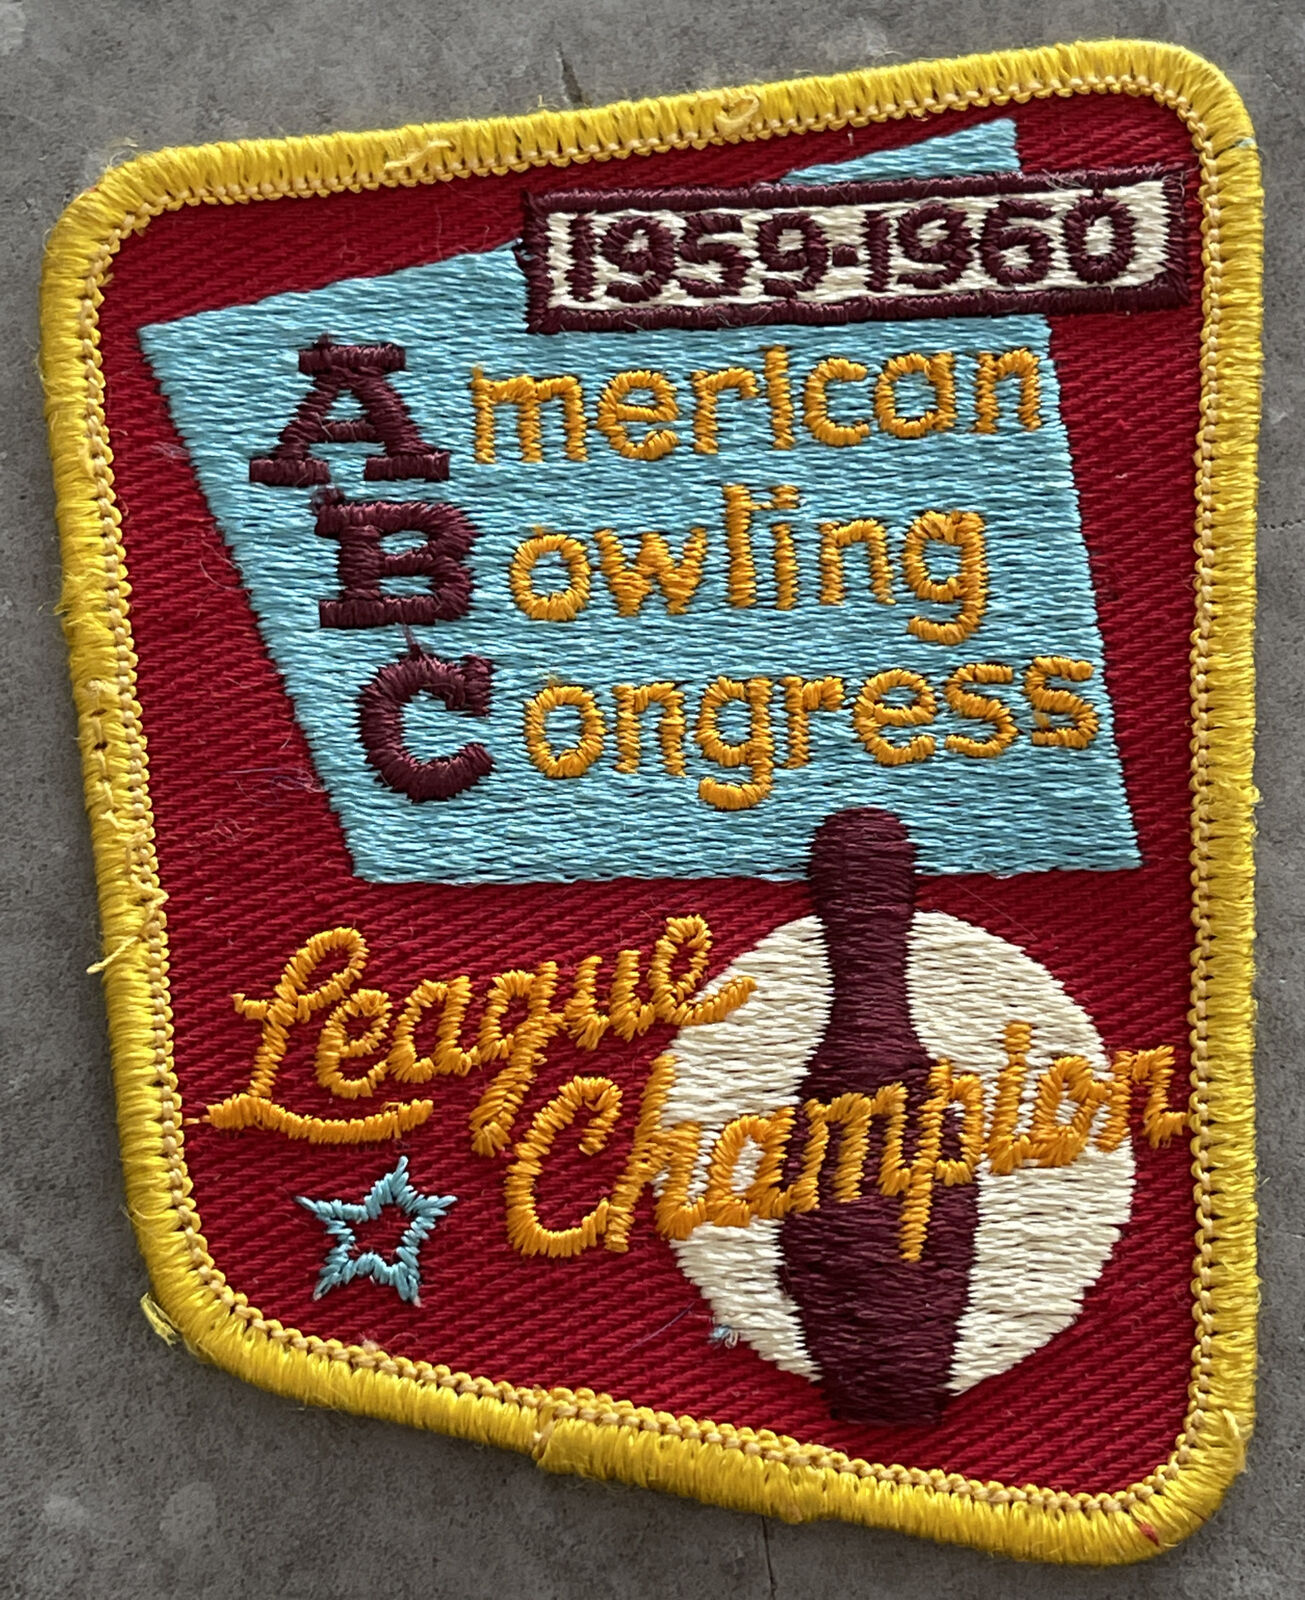 1960 Fun Retro Mid Century Modern Shaped Bowling Congress League Champion Patch